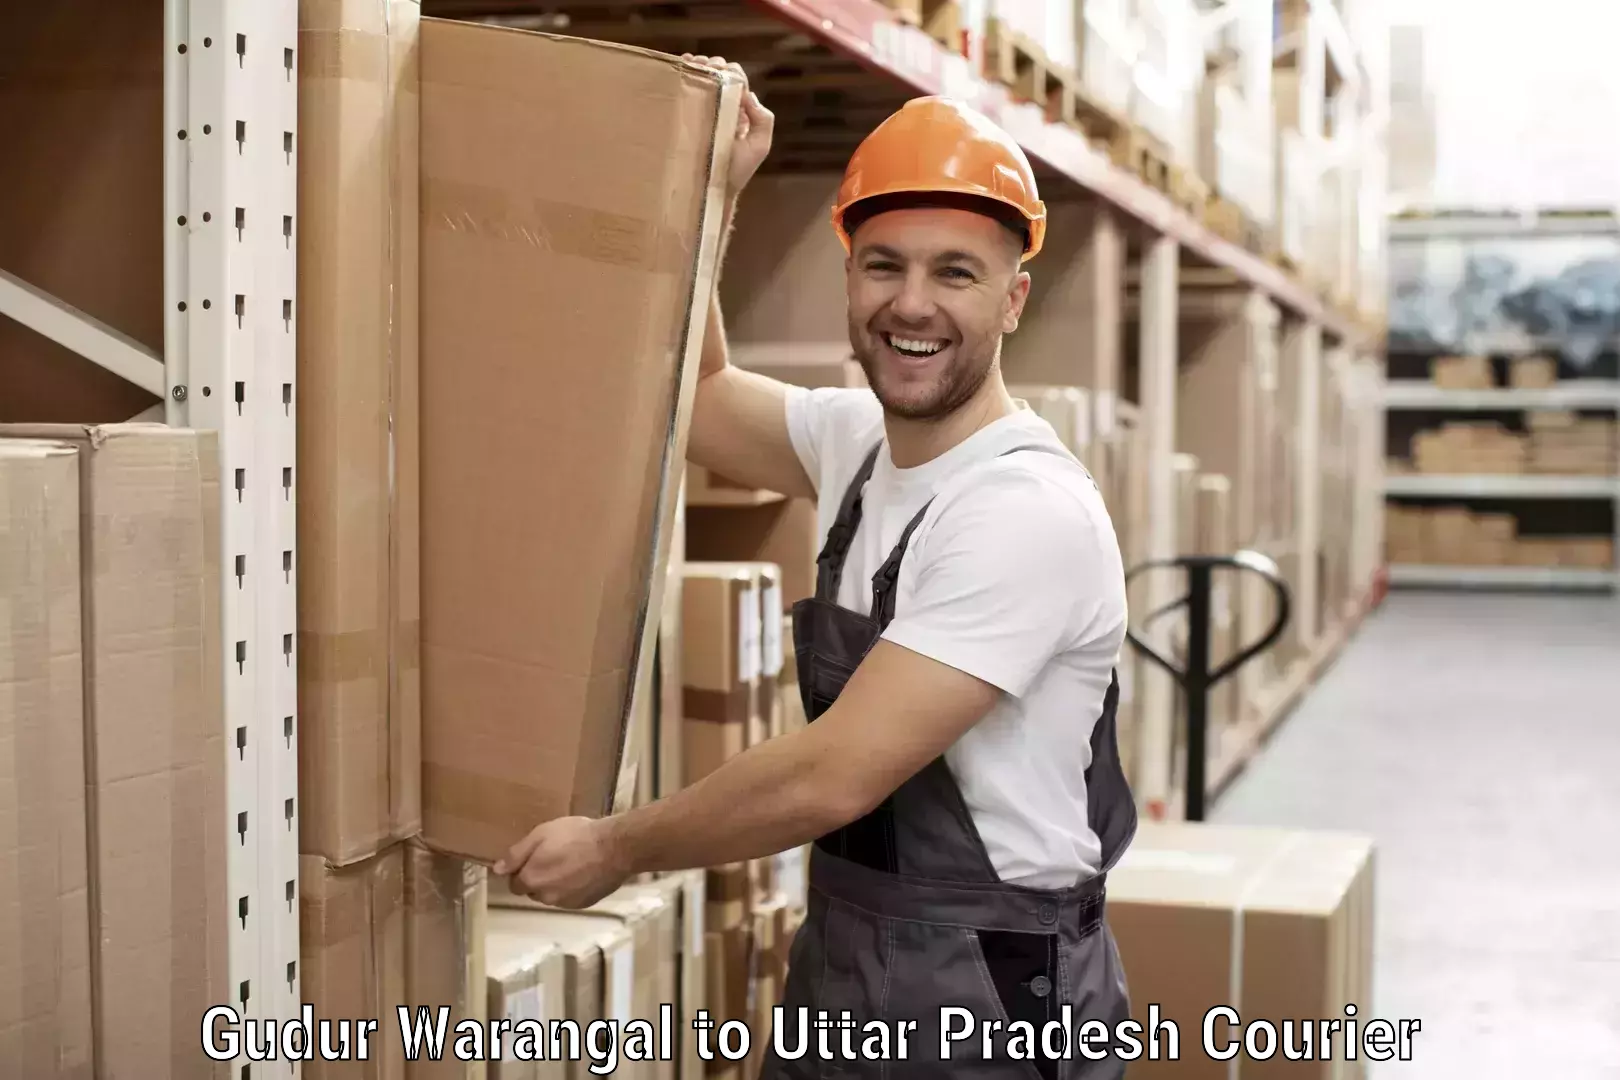 Round-the-clock parcel delivery Gudur Warangal to Aligarh Muslim University